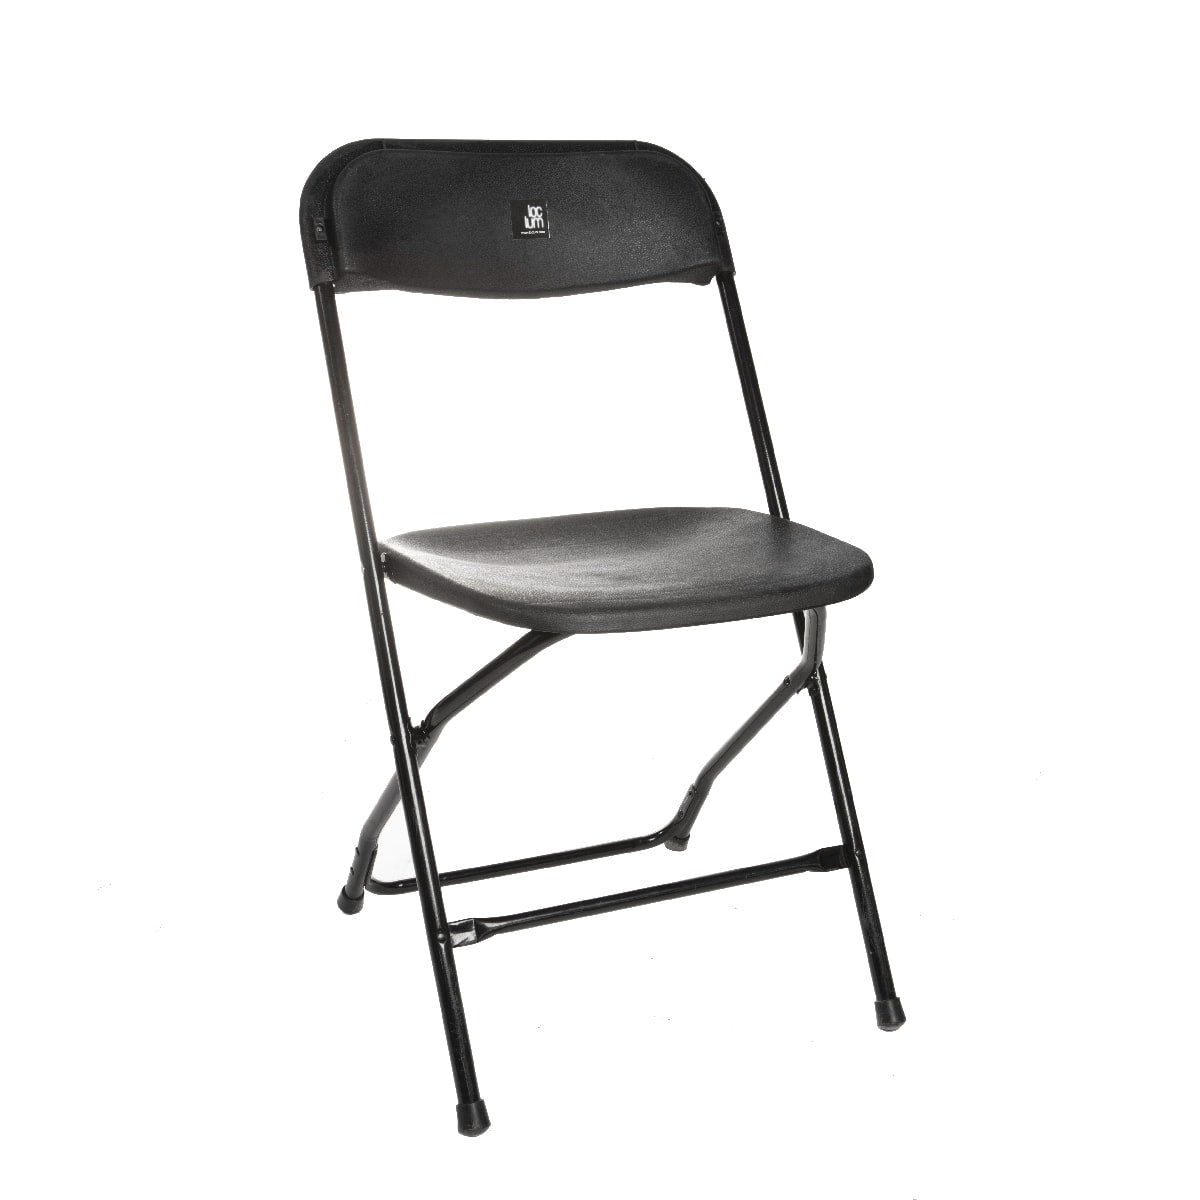  Folding chair (plastic)